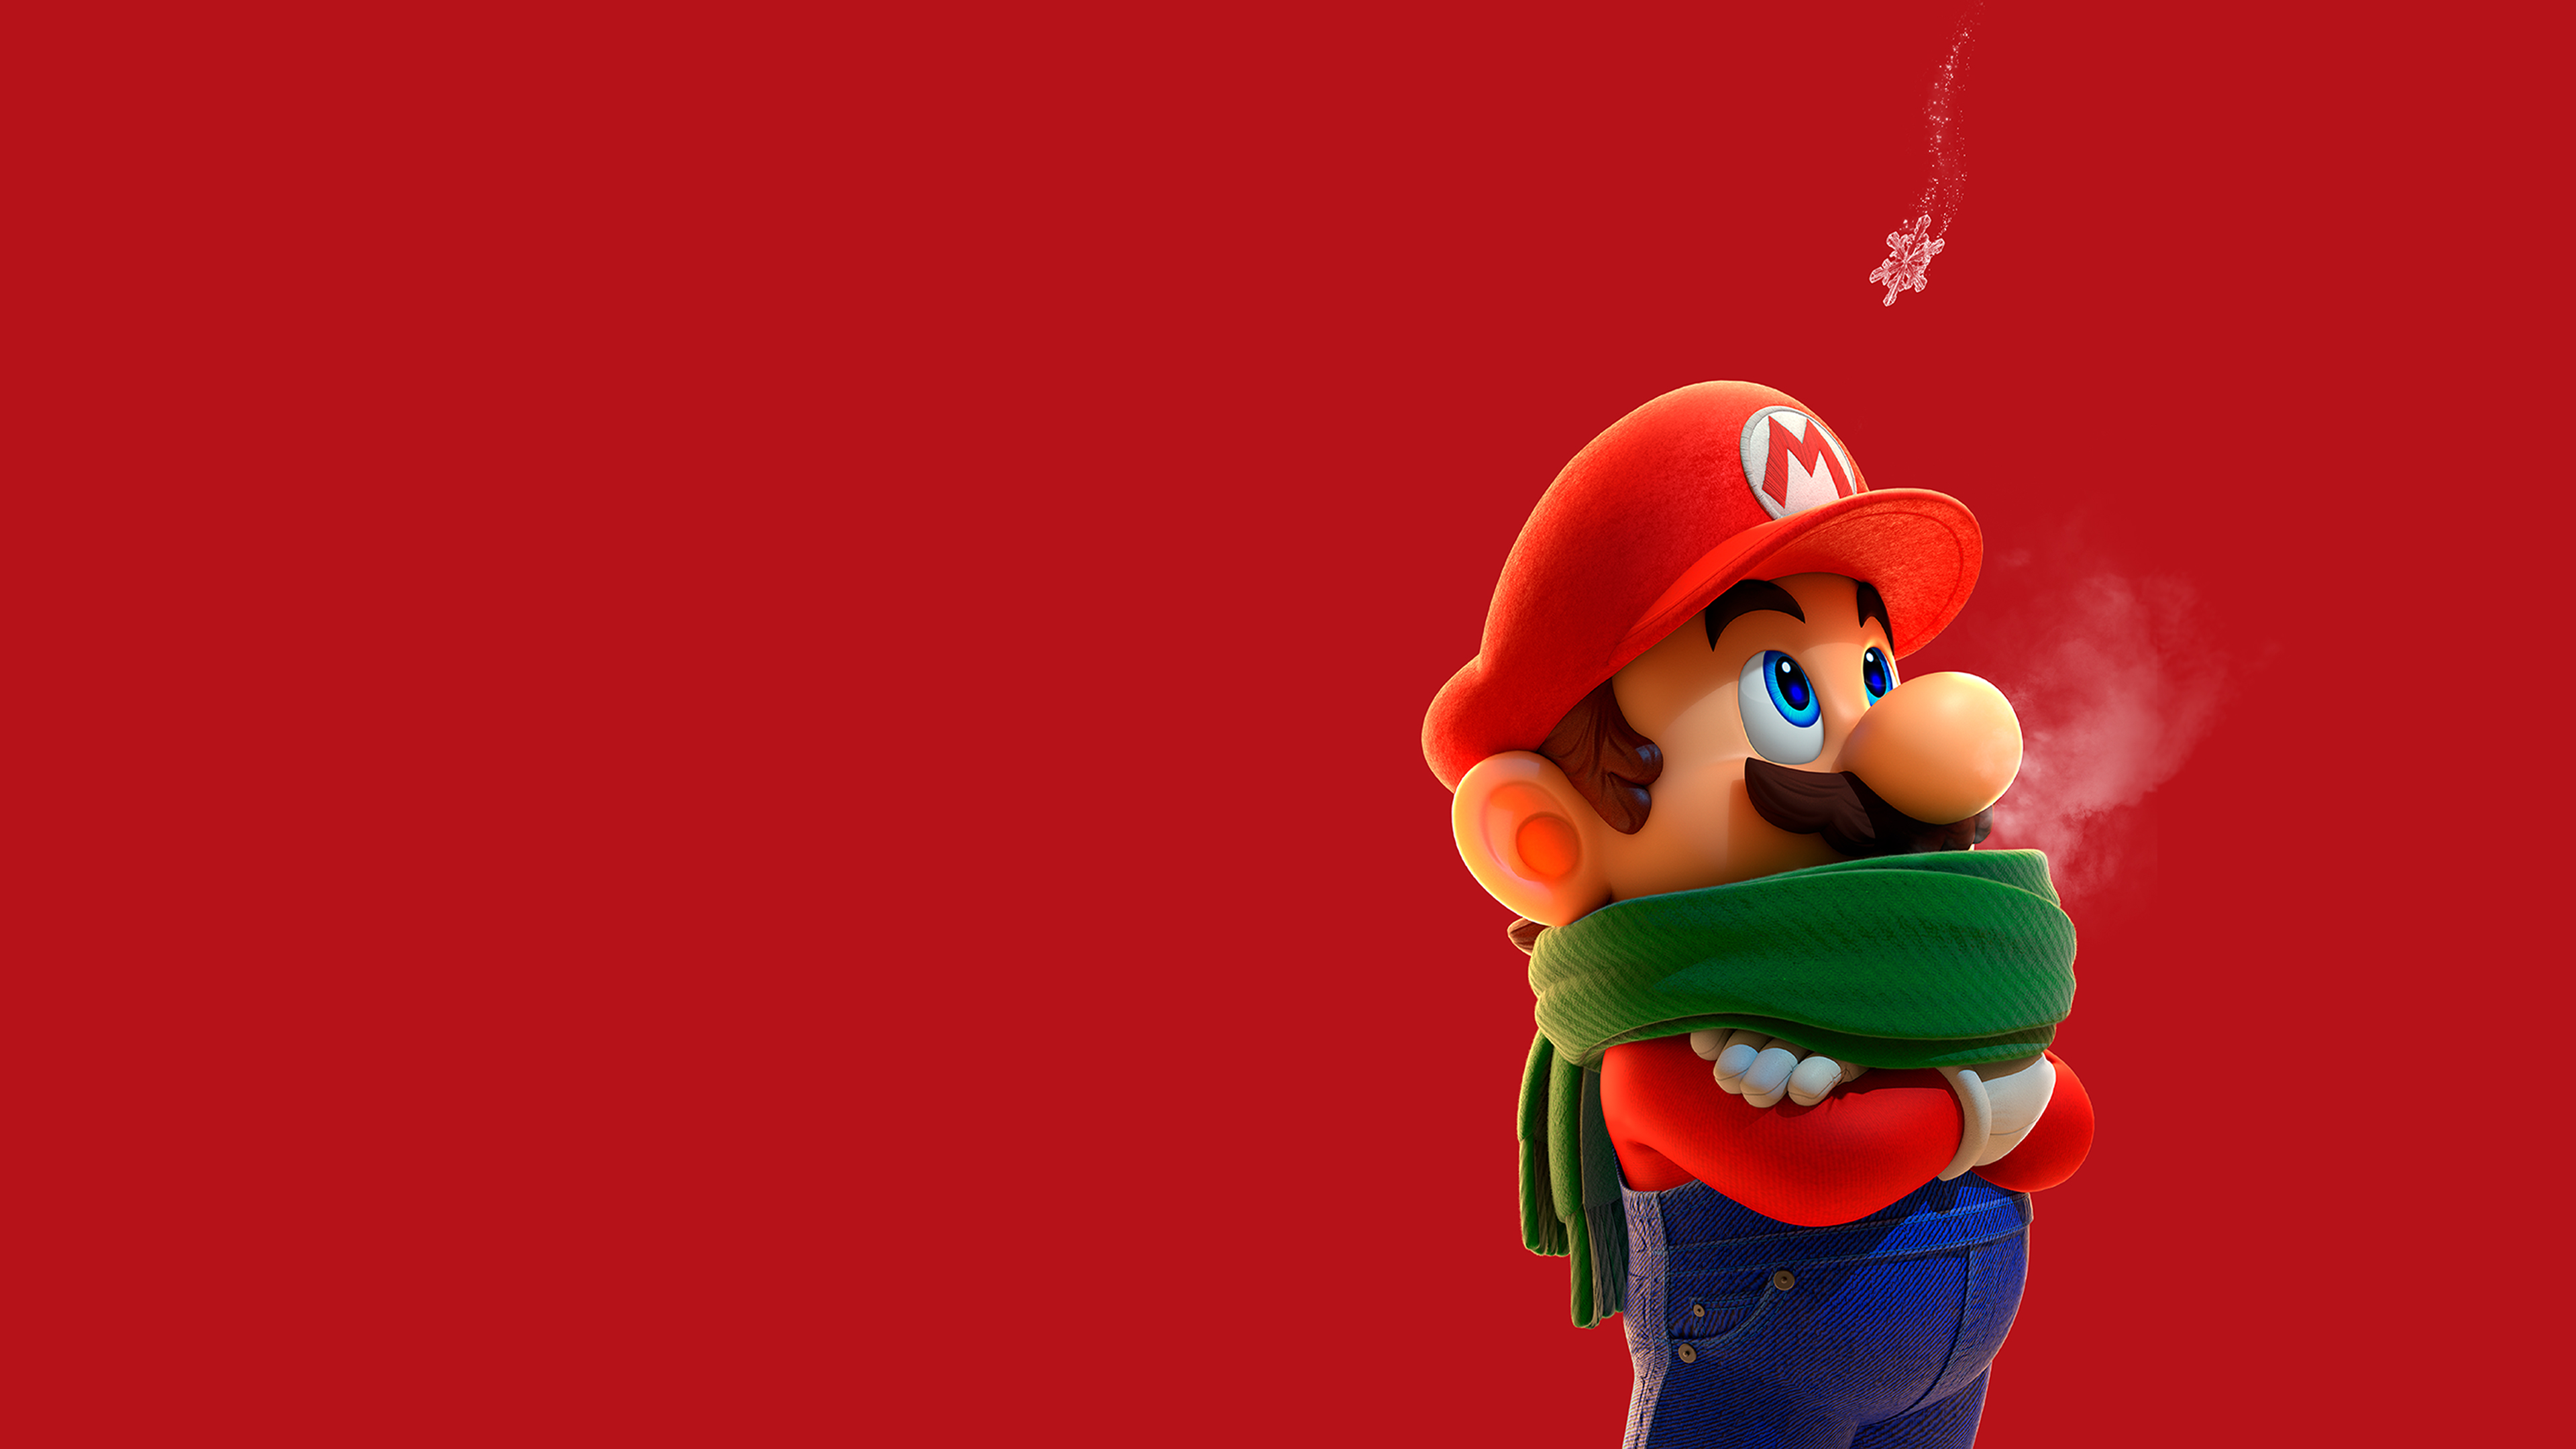 General 3840x2160 Super Mario scarf snowflakes Nintendo video game characters simple background digital art